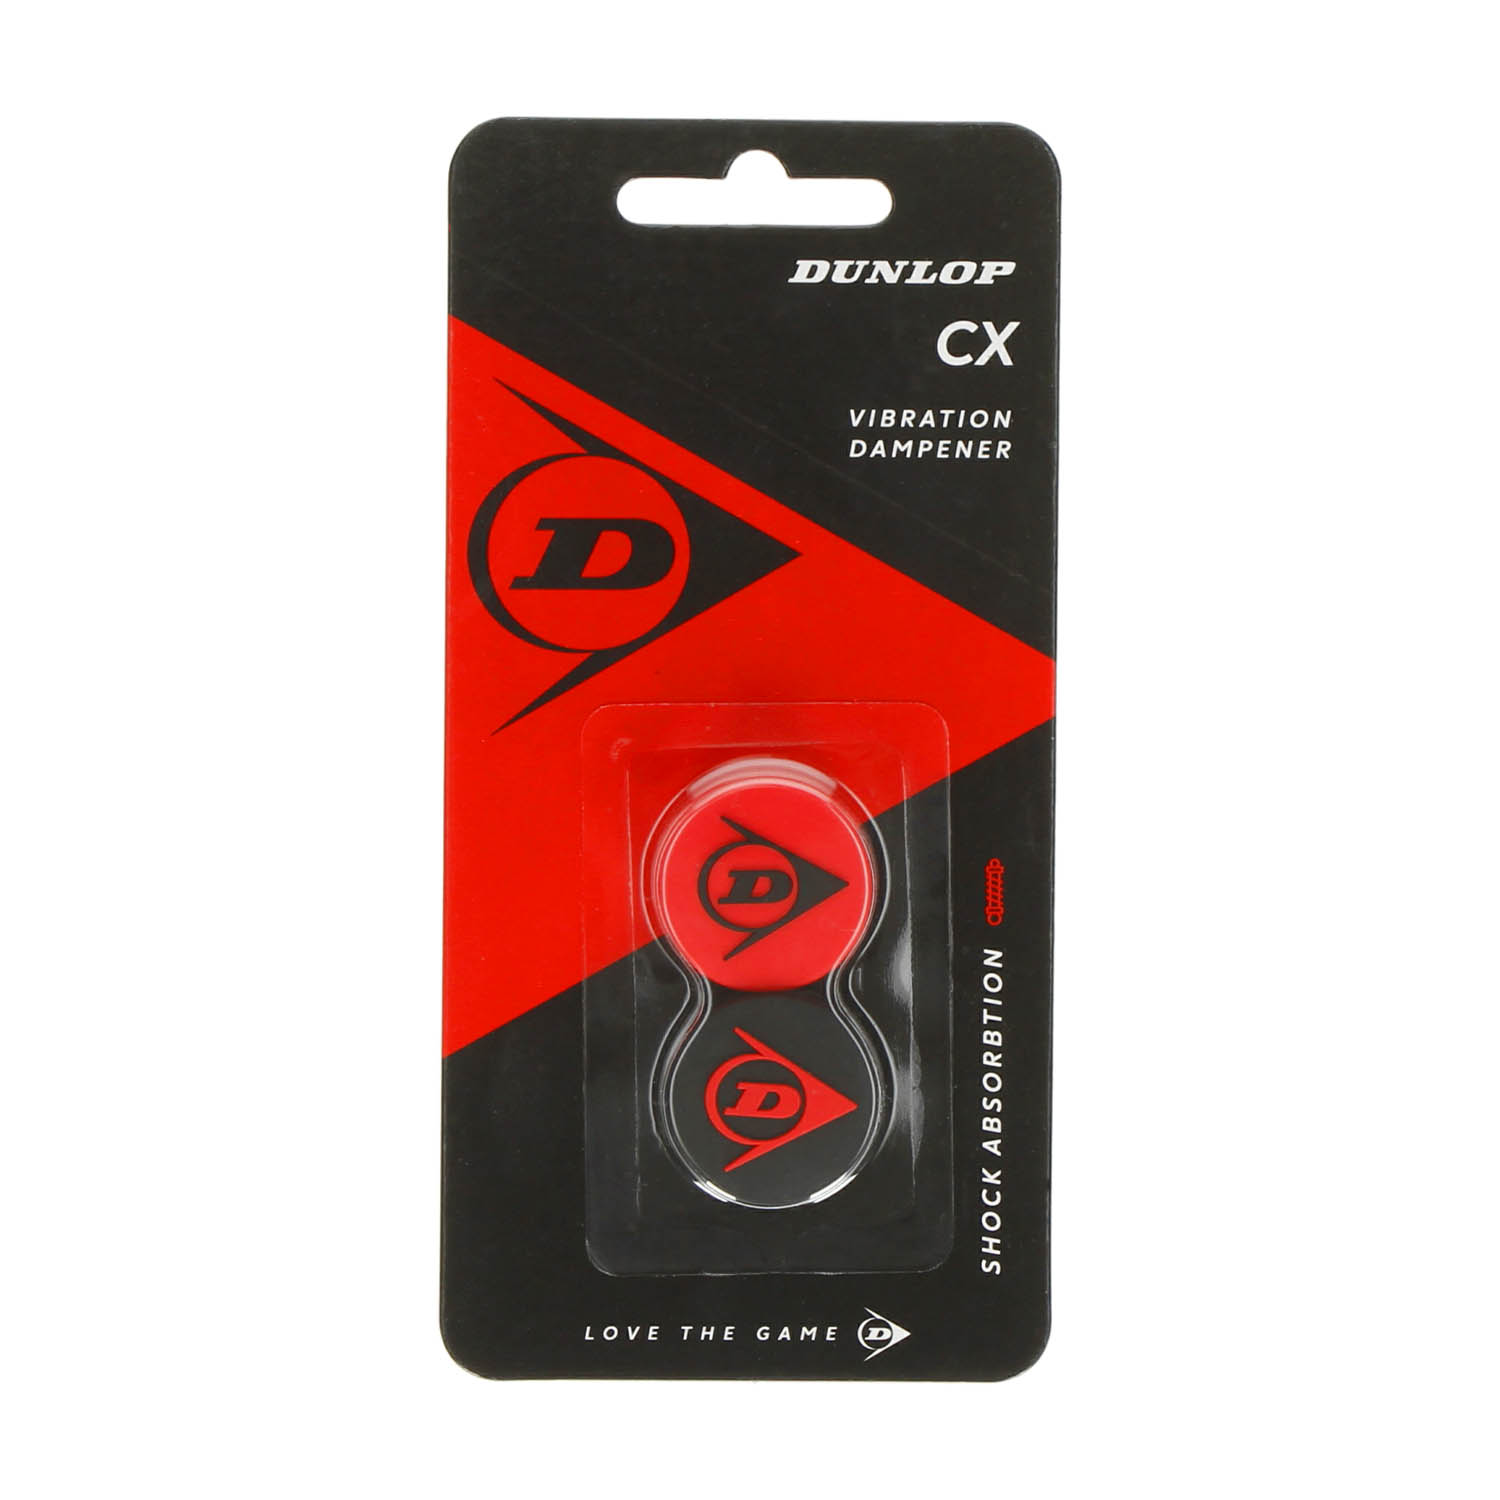 Dunlop CX Flying x 2 Dampener - Red/Black